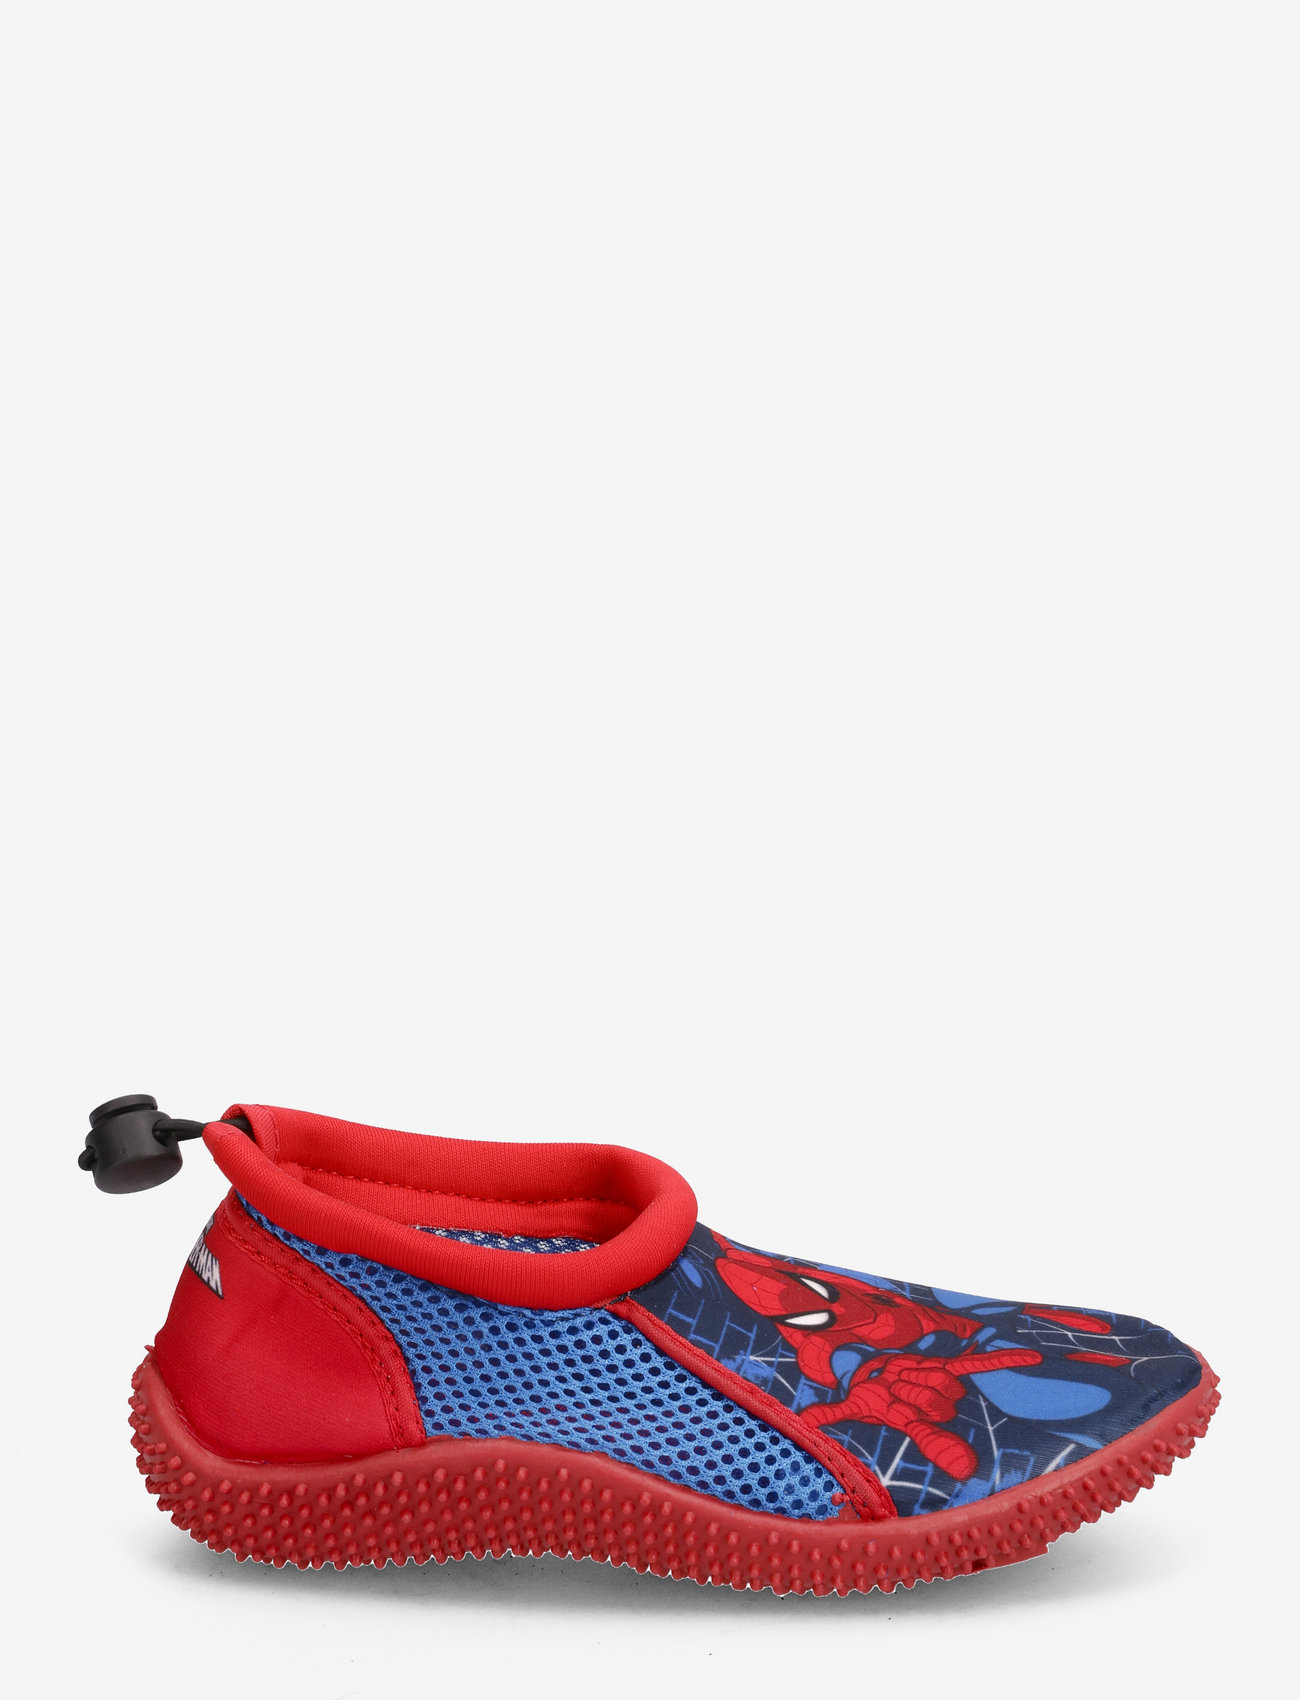 Leomil - SPIDERMAN Aqua shoes - kesälöytöjä - cobalt blue/red - 1